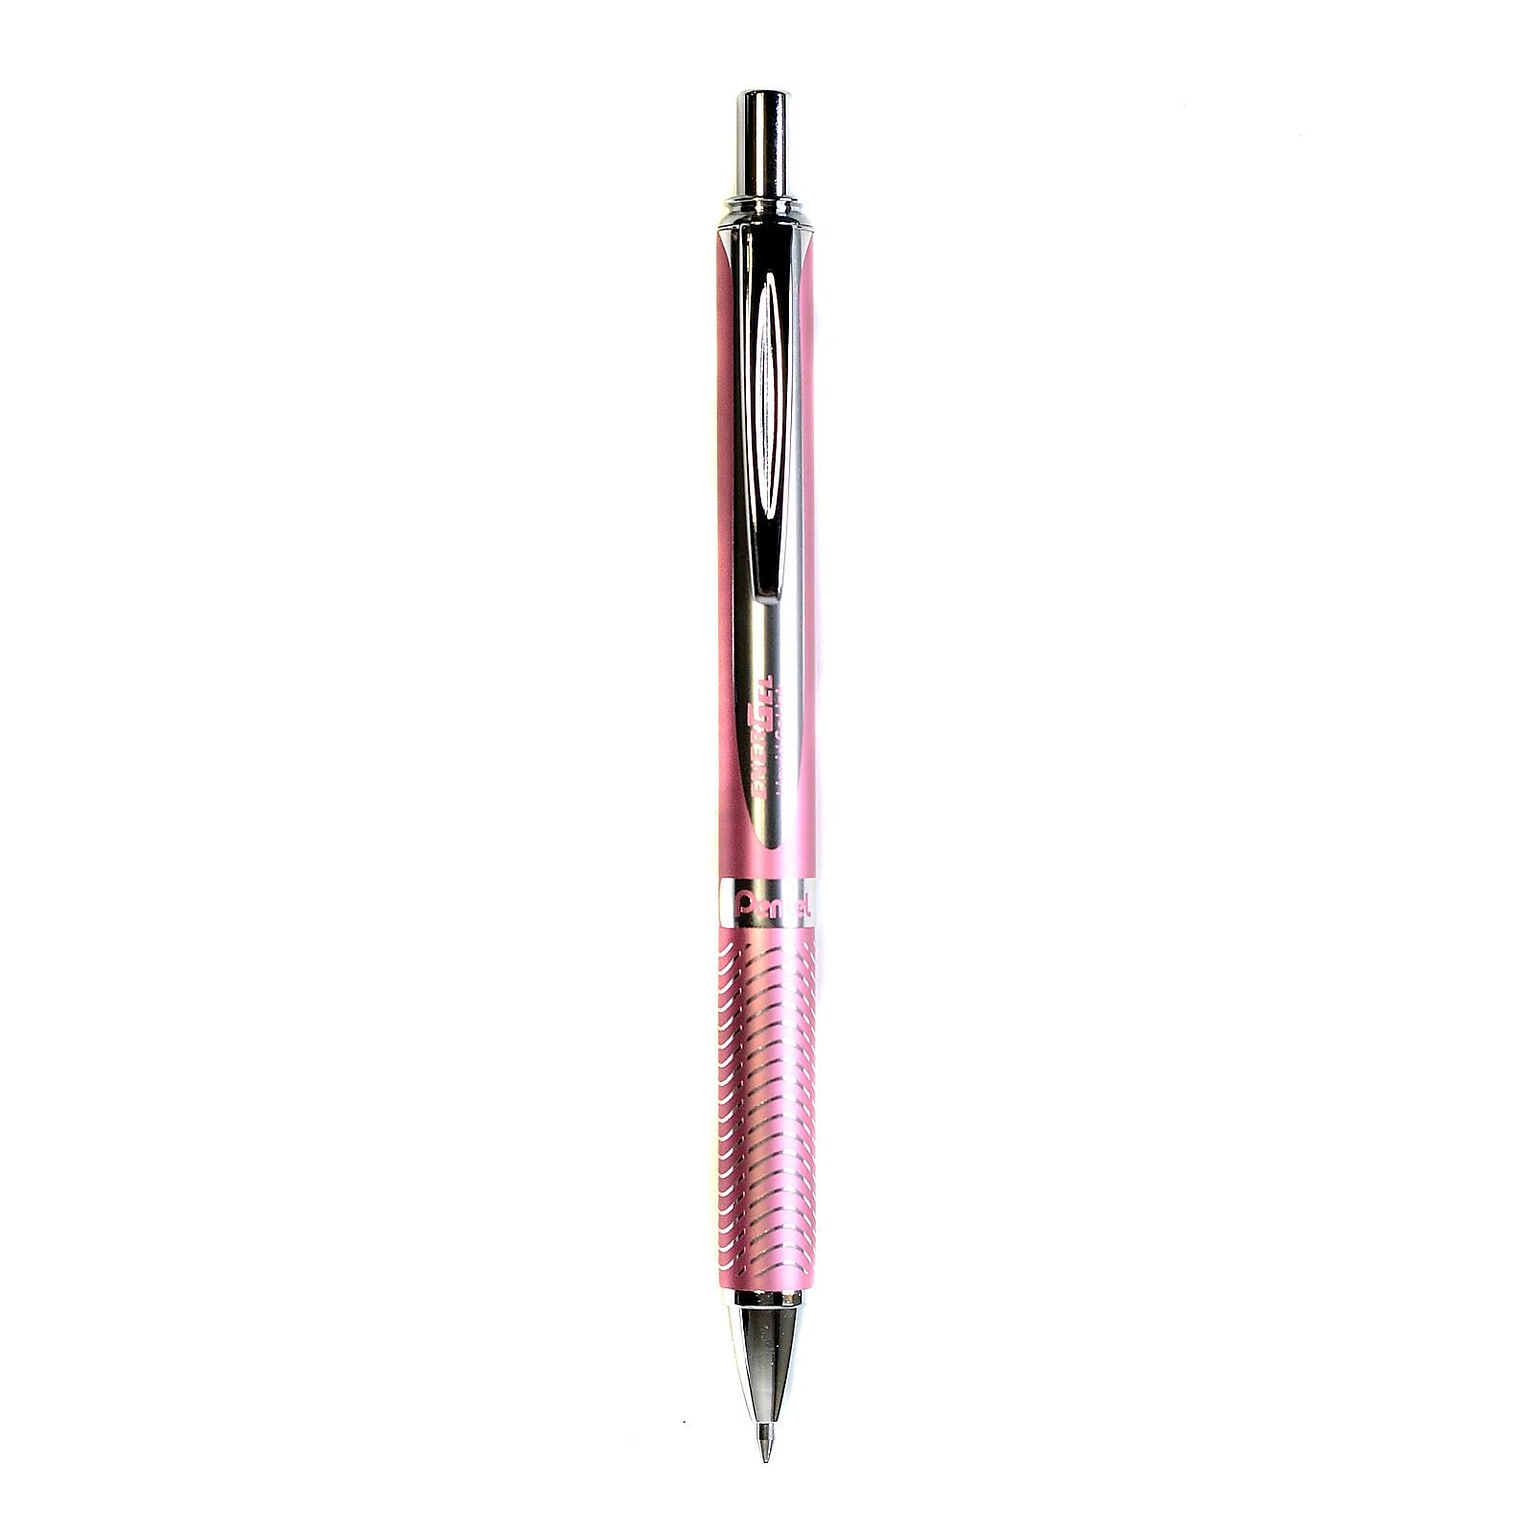 Pentel Energel Alloy Rt Retractable Gel Pen, Medium Point, Black Ink, 3/Pack (01027-PK3)